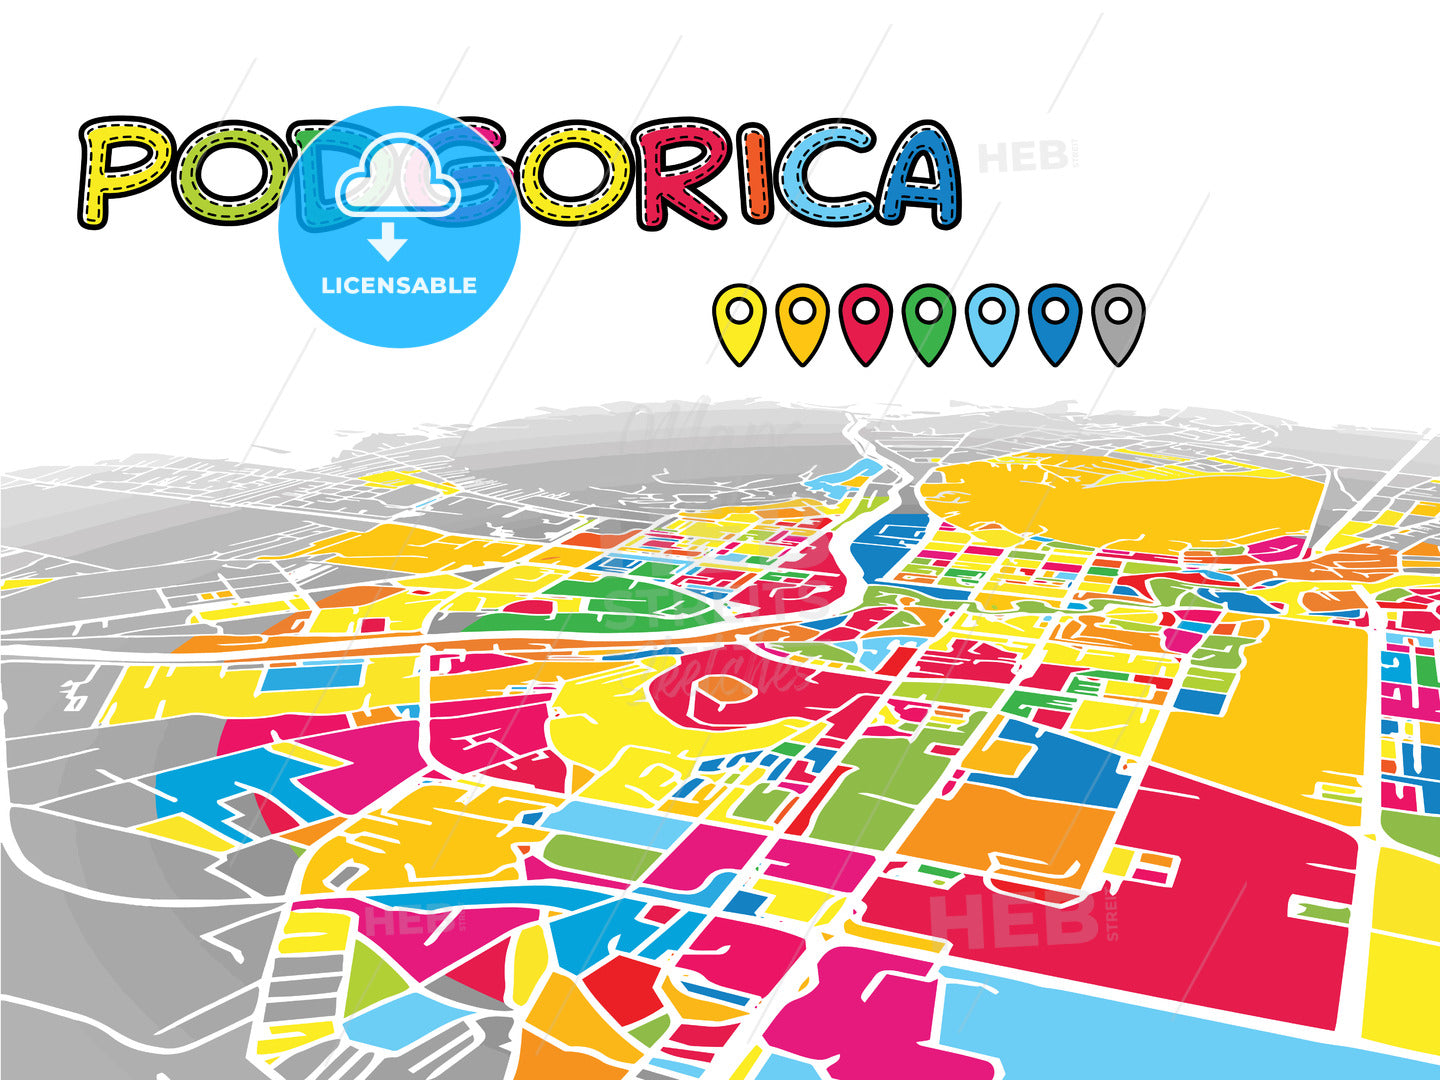 Podgorica, Montenegro, downtown map in perspective